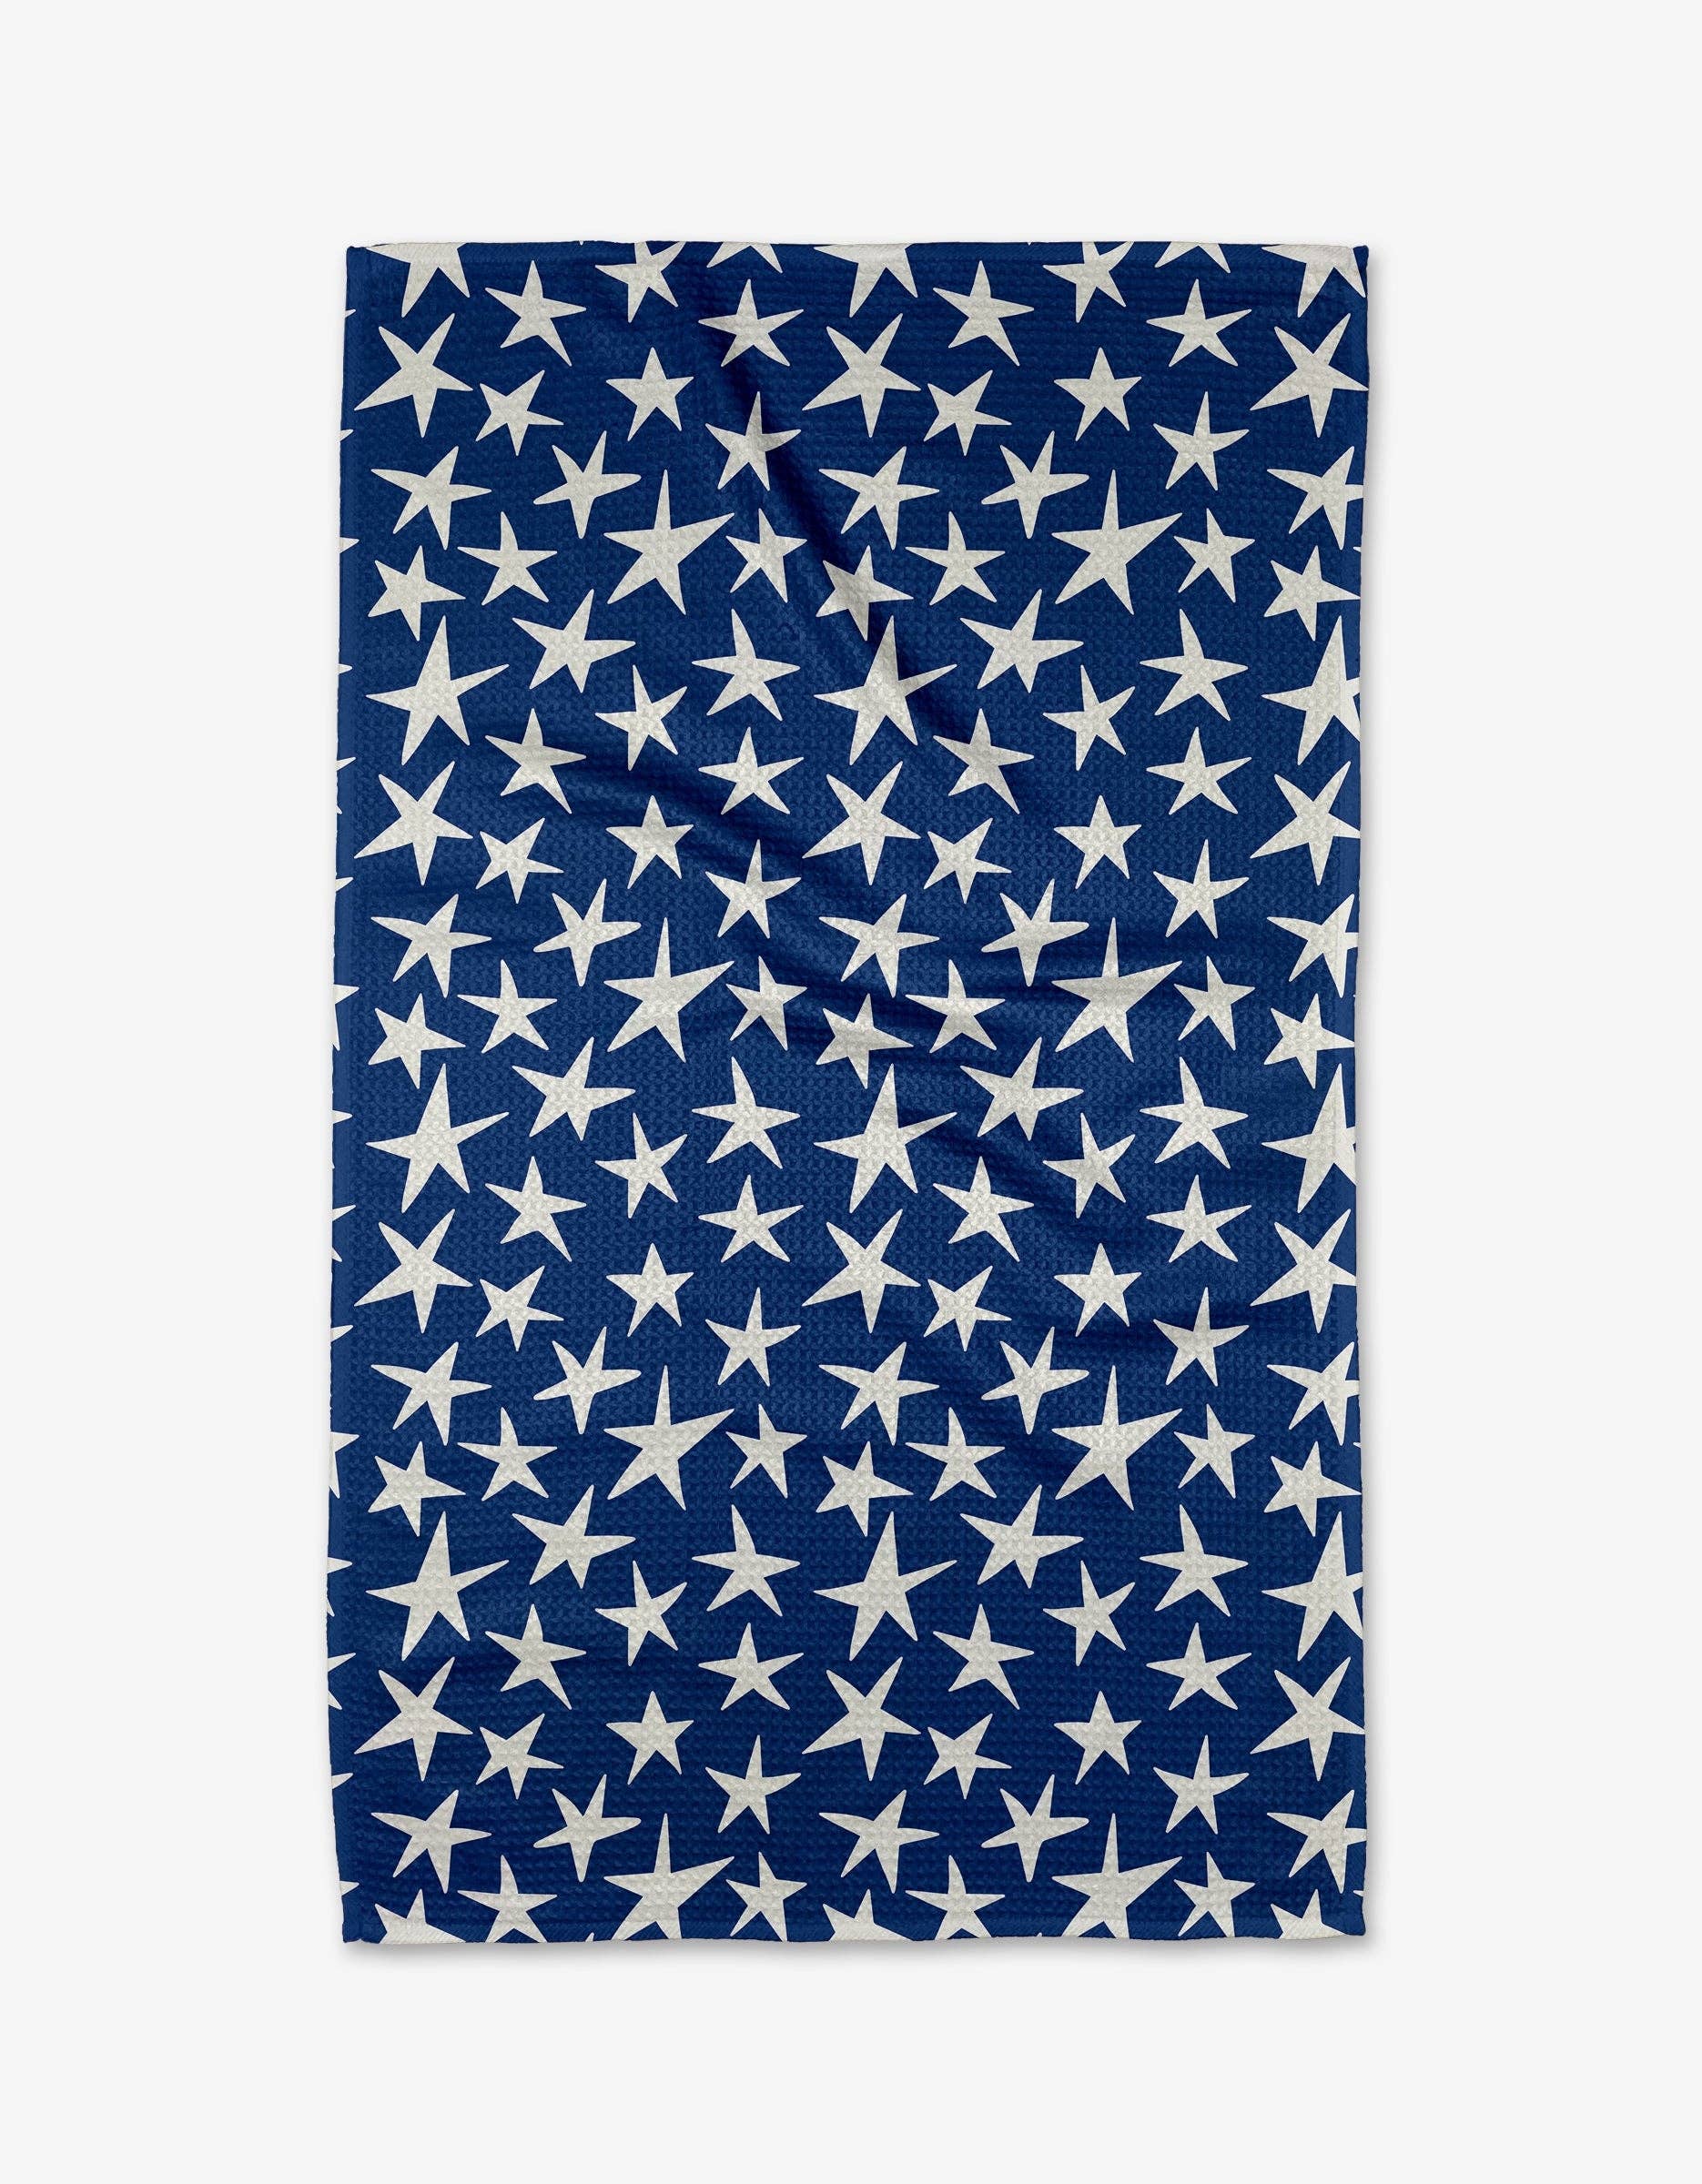 Geometry USA Stars Tea Towel